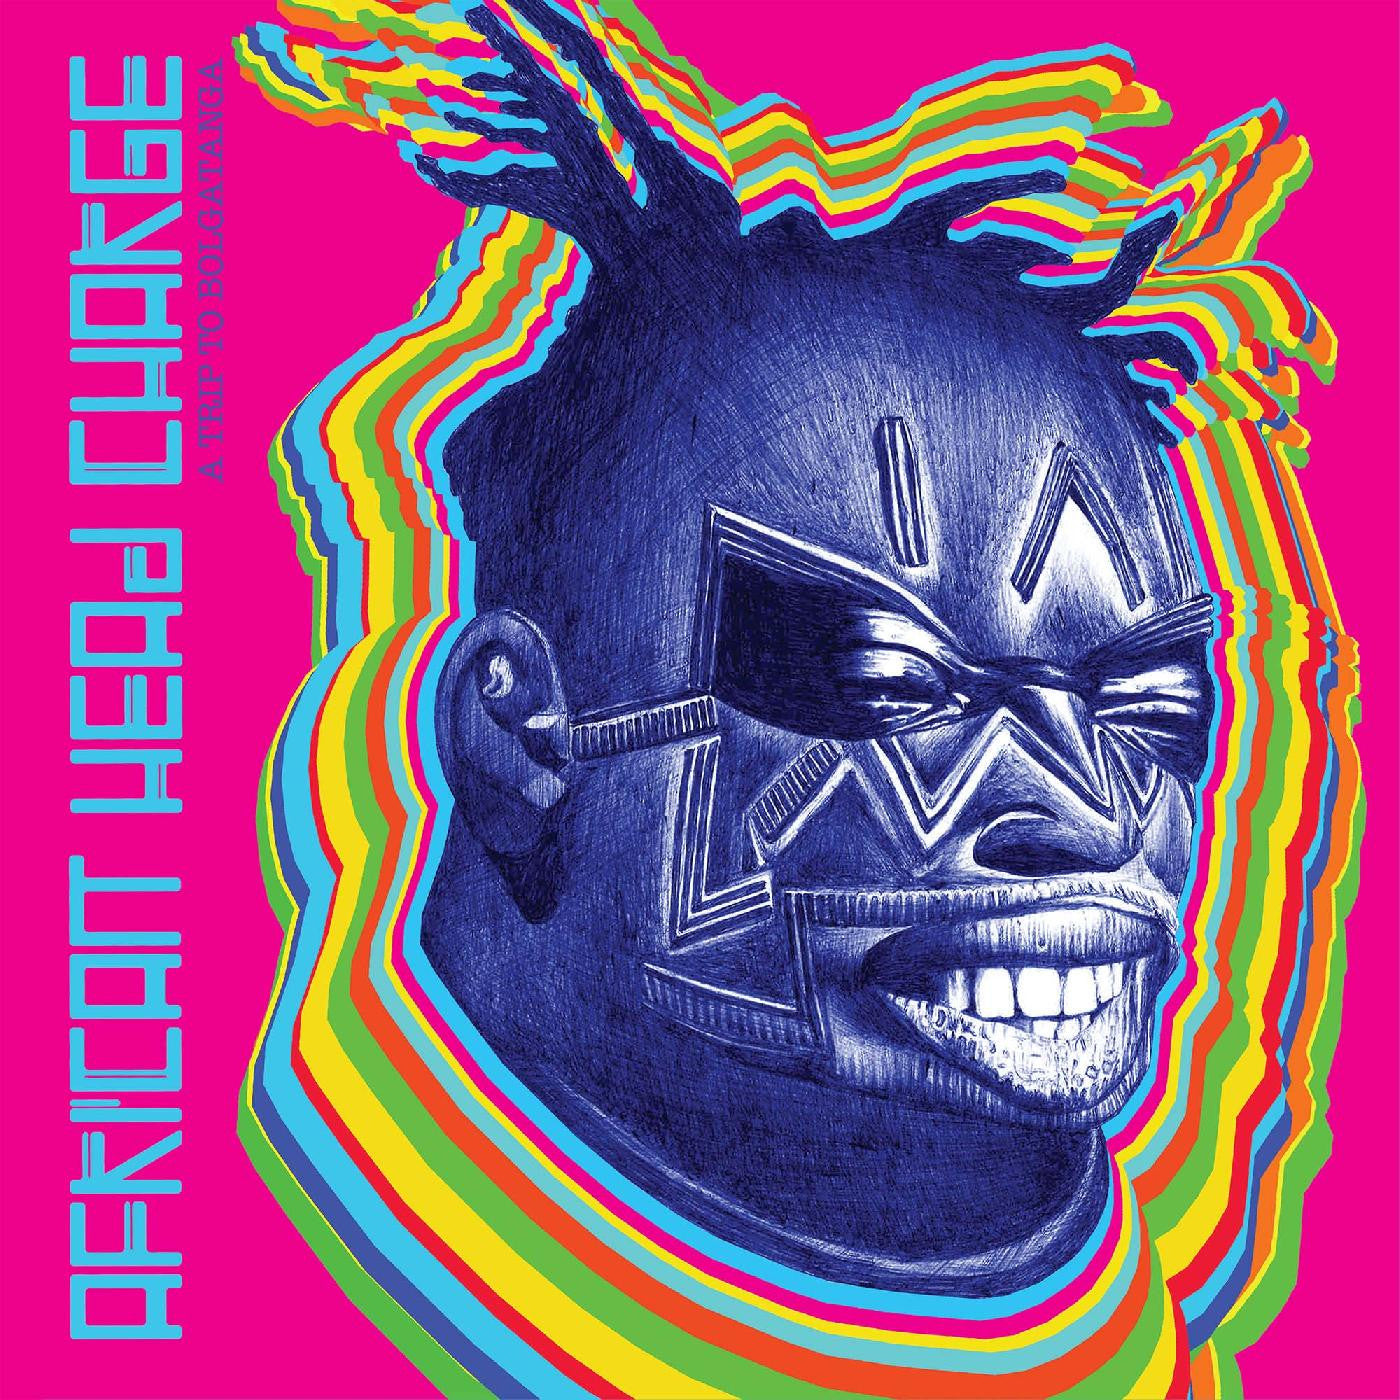 African Head Charge - A Trip To Bolgatanga [Glow In The Dark Vinyl]